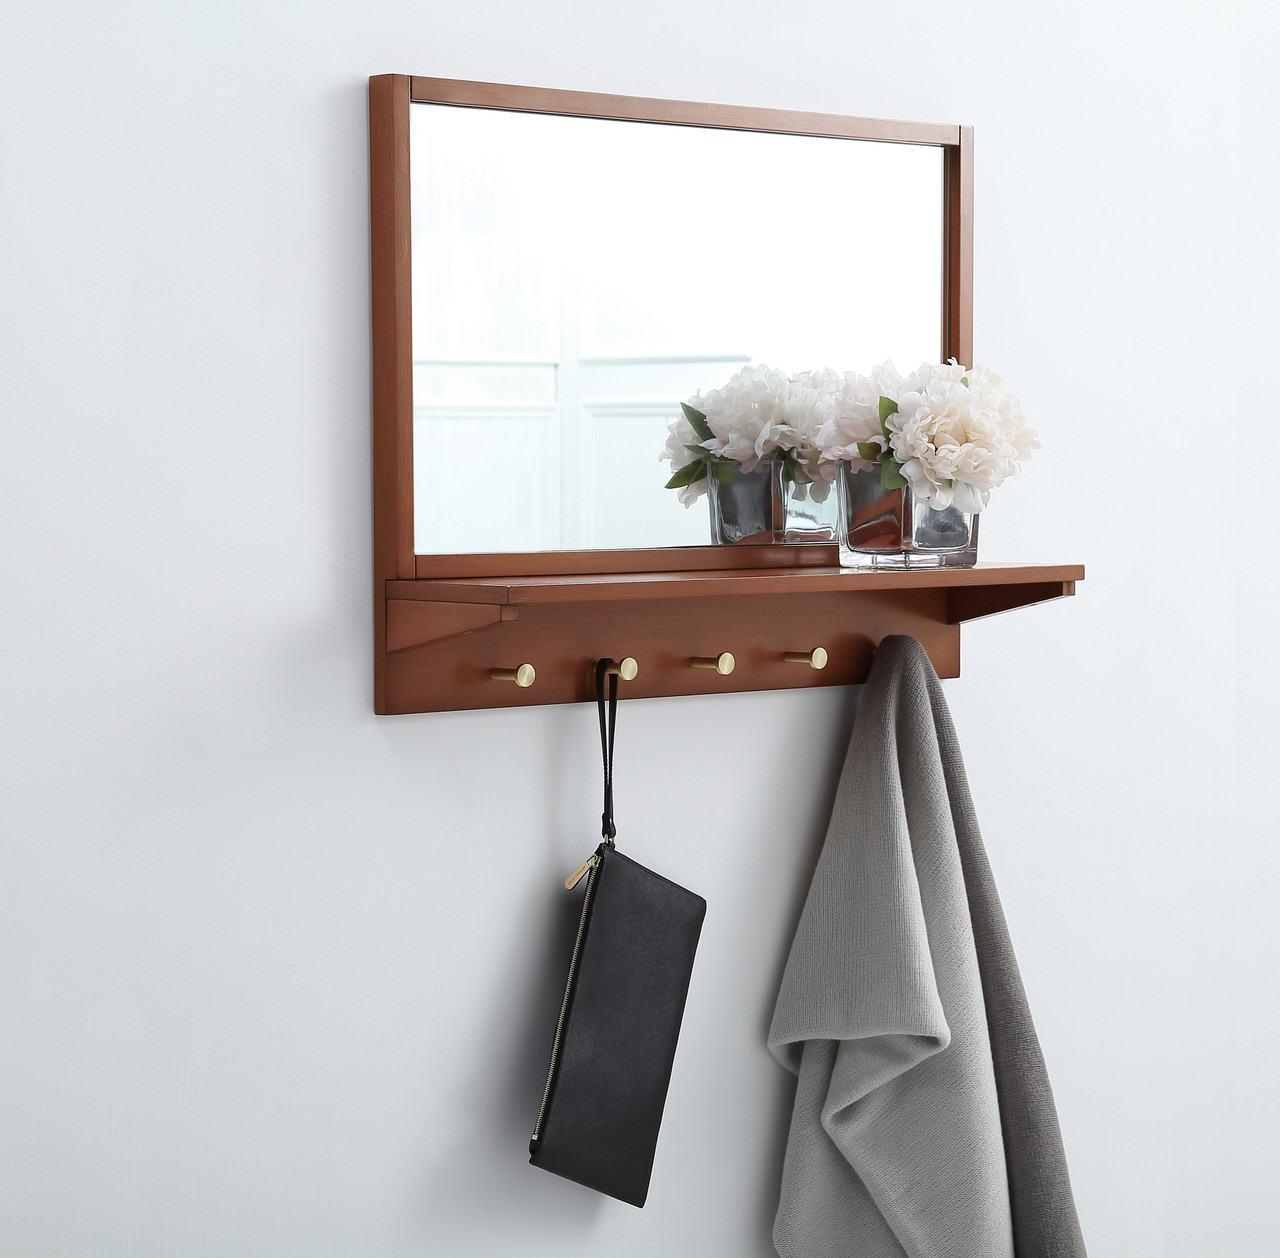 Elegant Decor MR502821PE Entryway mirror with shelf  28 inch x 21 inch in pecan